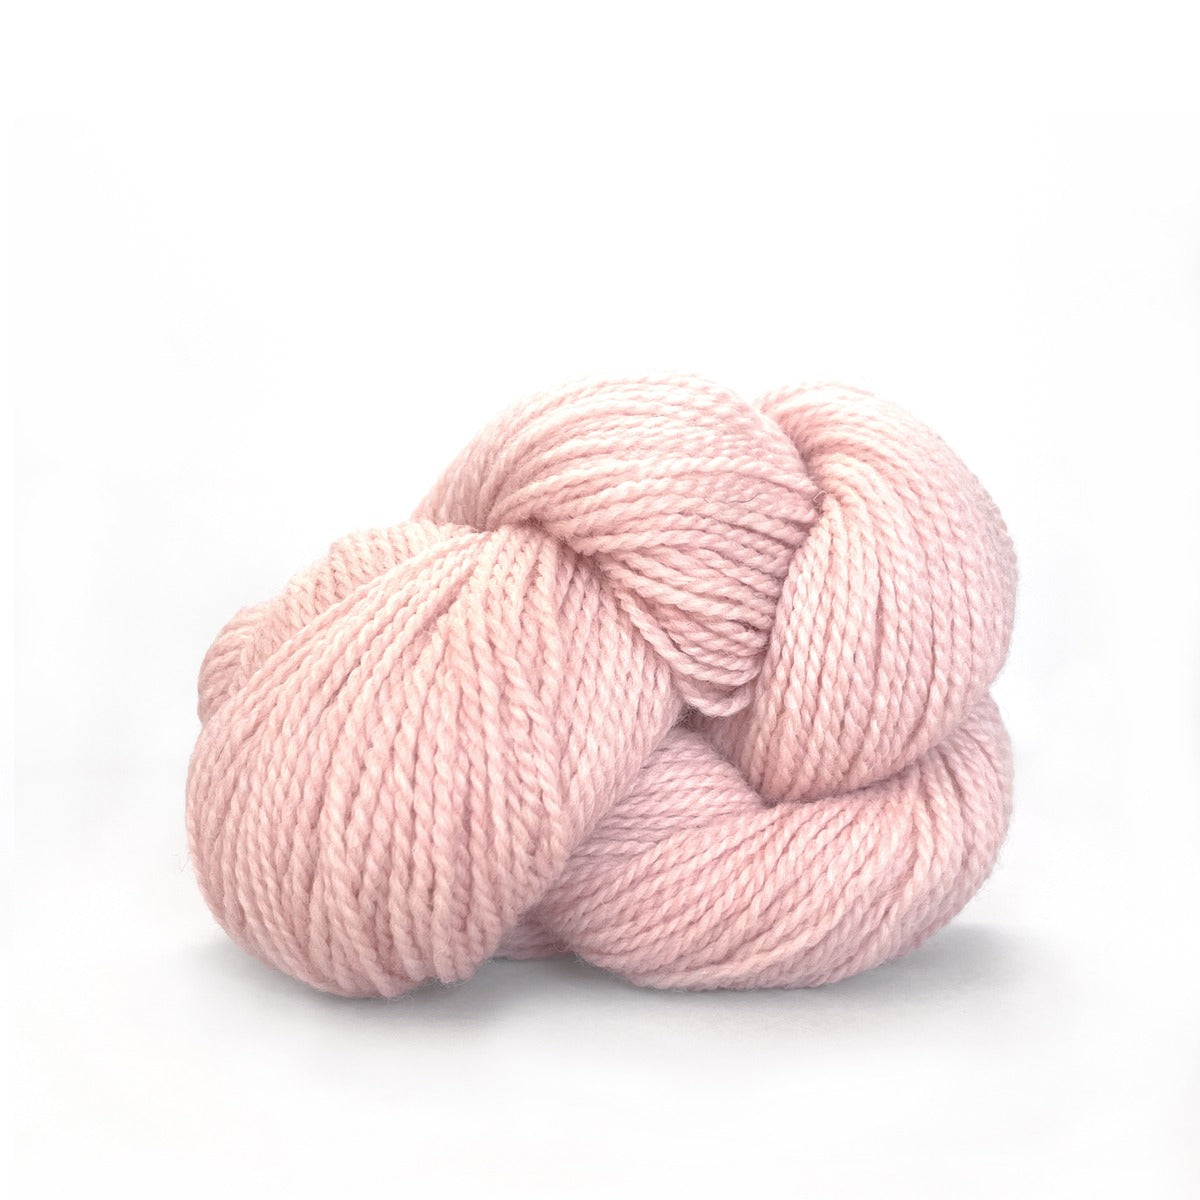 Kelbourne Woolens Yarn 695 light pink heather - new! Camper